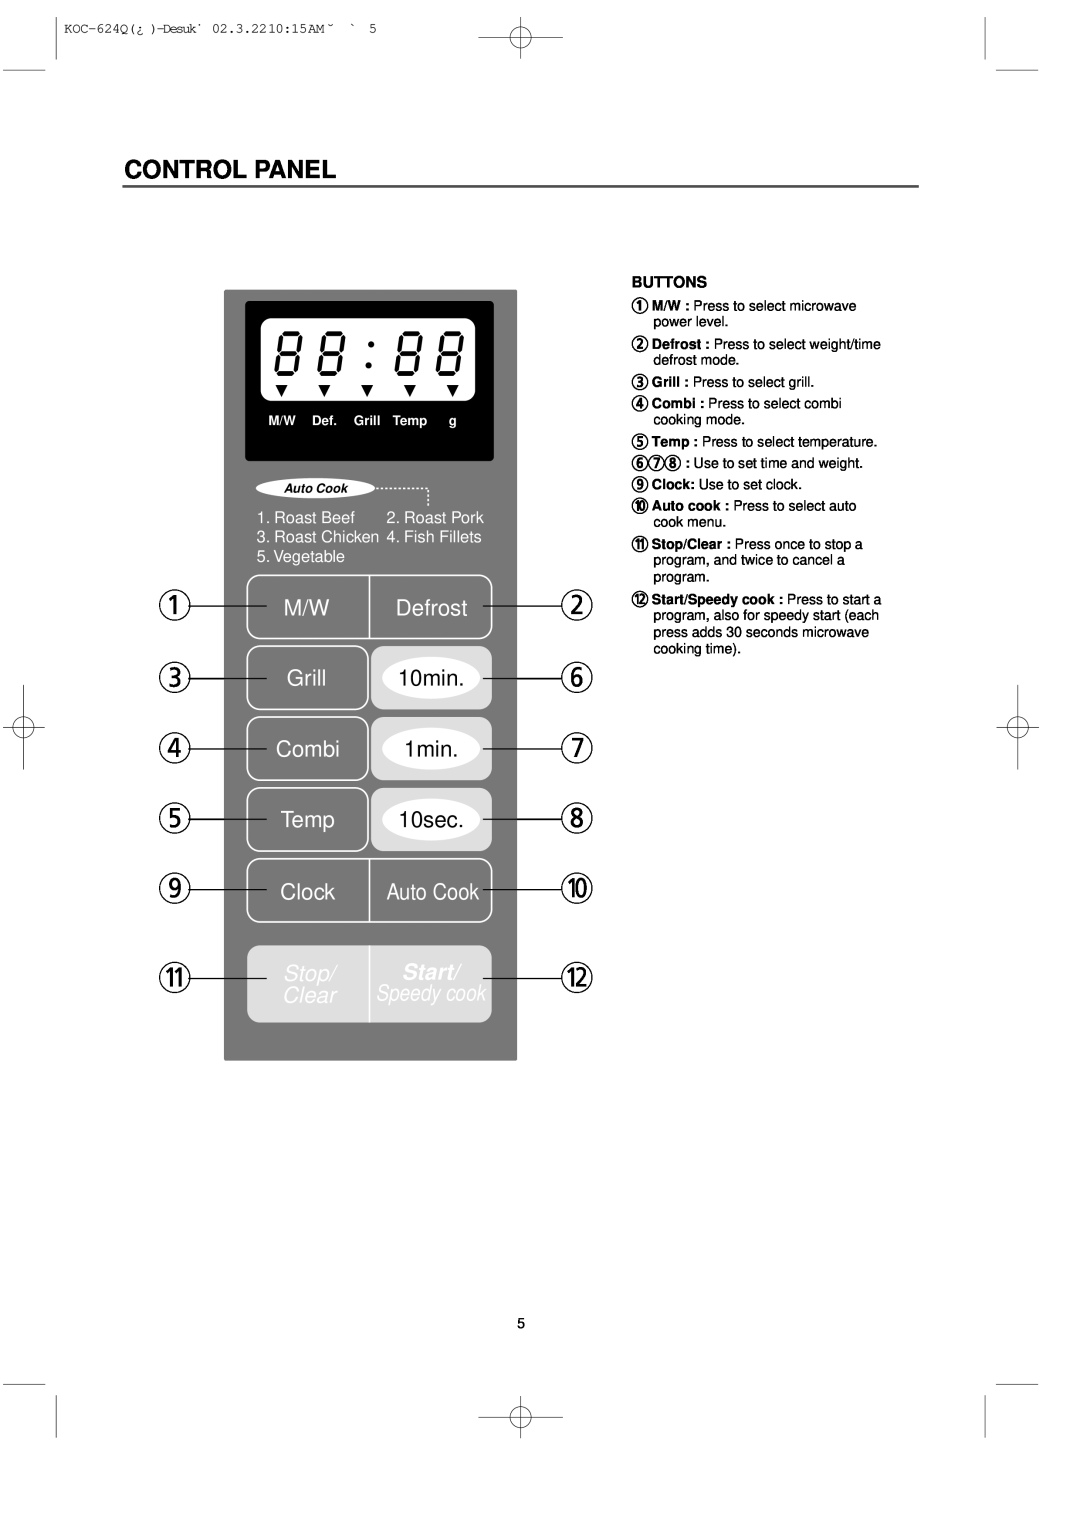 Daewoo KOC-624Q Control Panel, Defrost, Grill, 10min, Combi, 1min, Temp, 10sec, Clock, Stop, Start, Clear, Auto Cook 